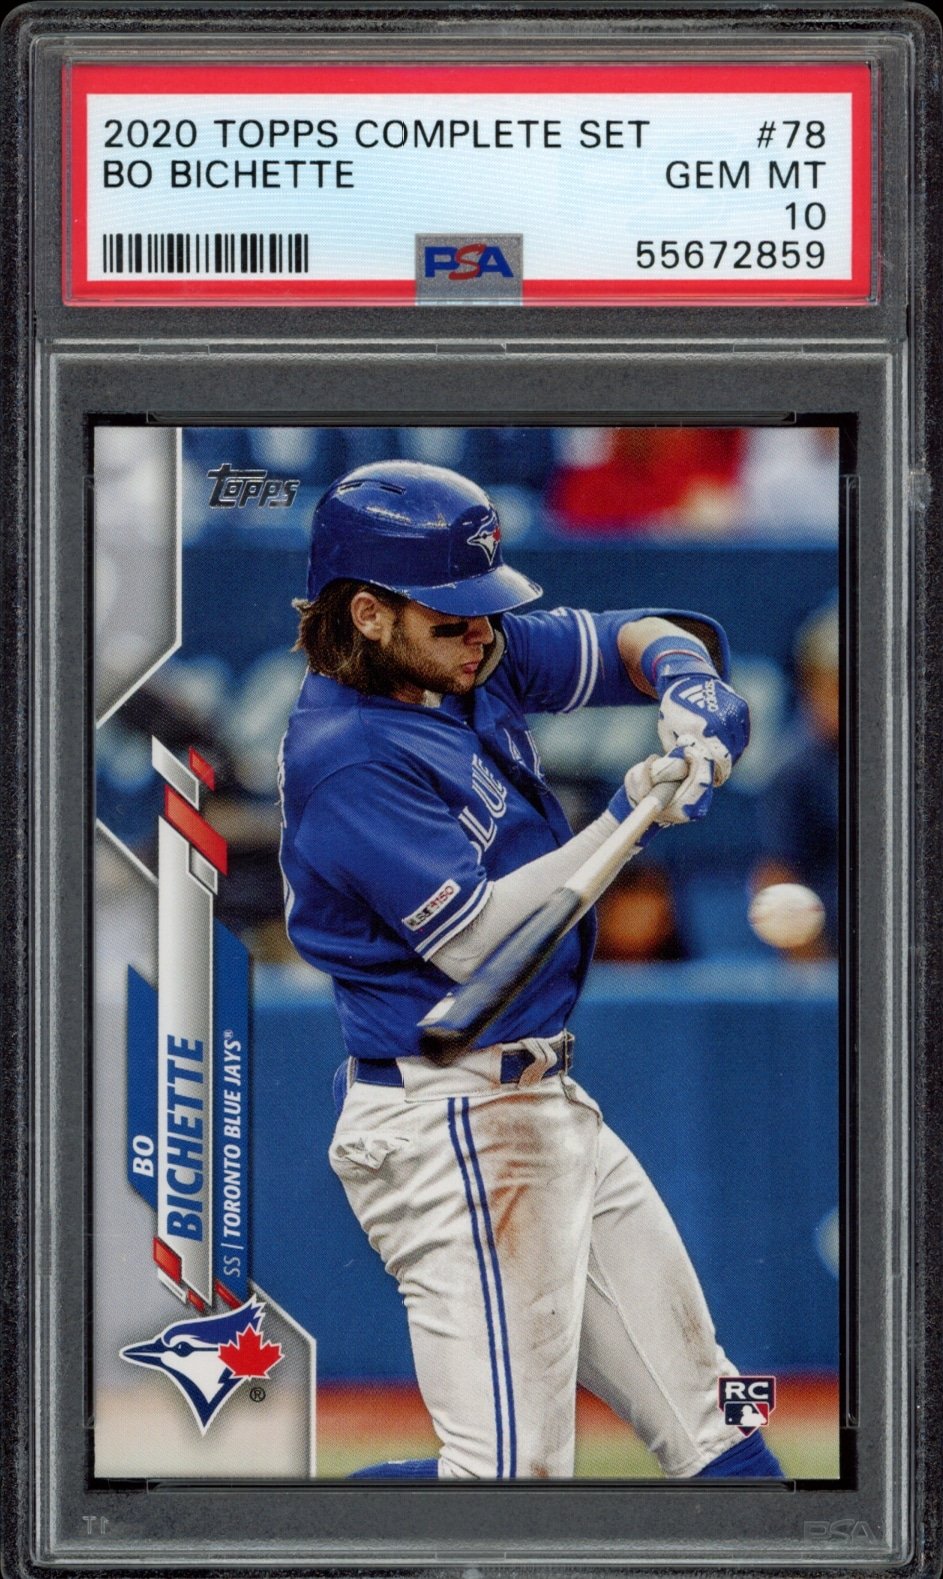 PSA 10 rated 2020 Topps Baseball Card featuring Toronto Blue Jays player, Bo Bichette.